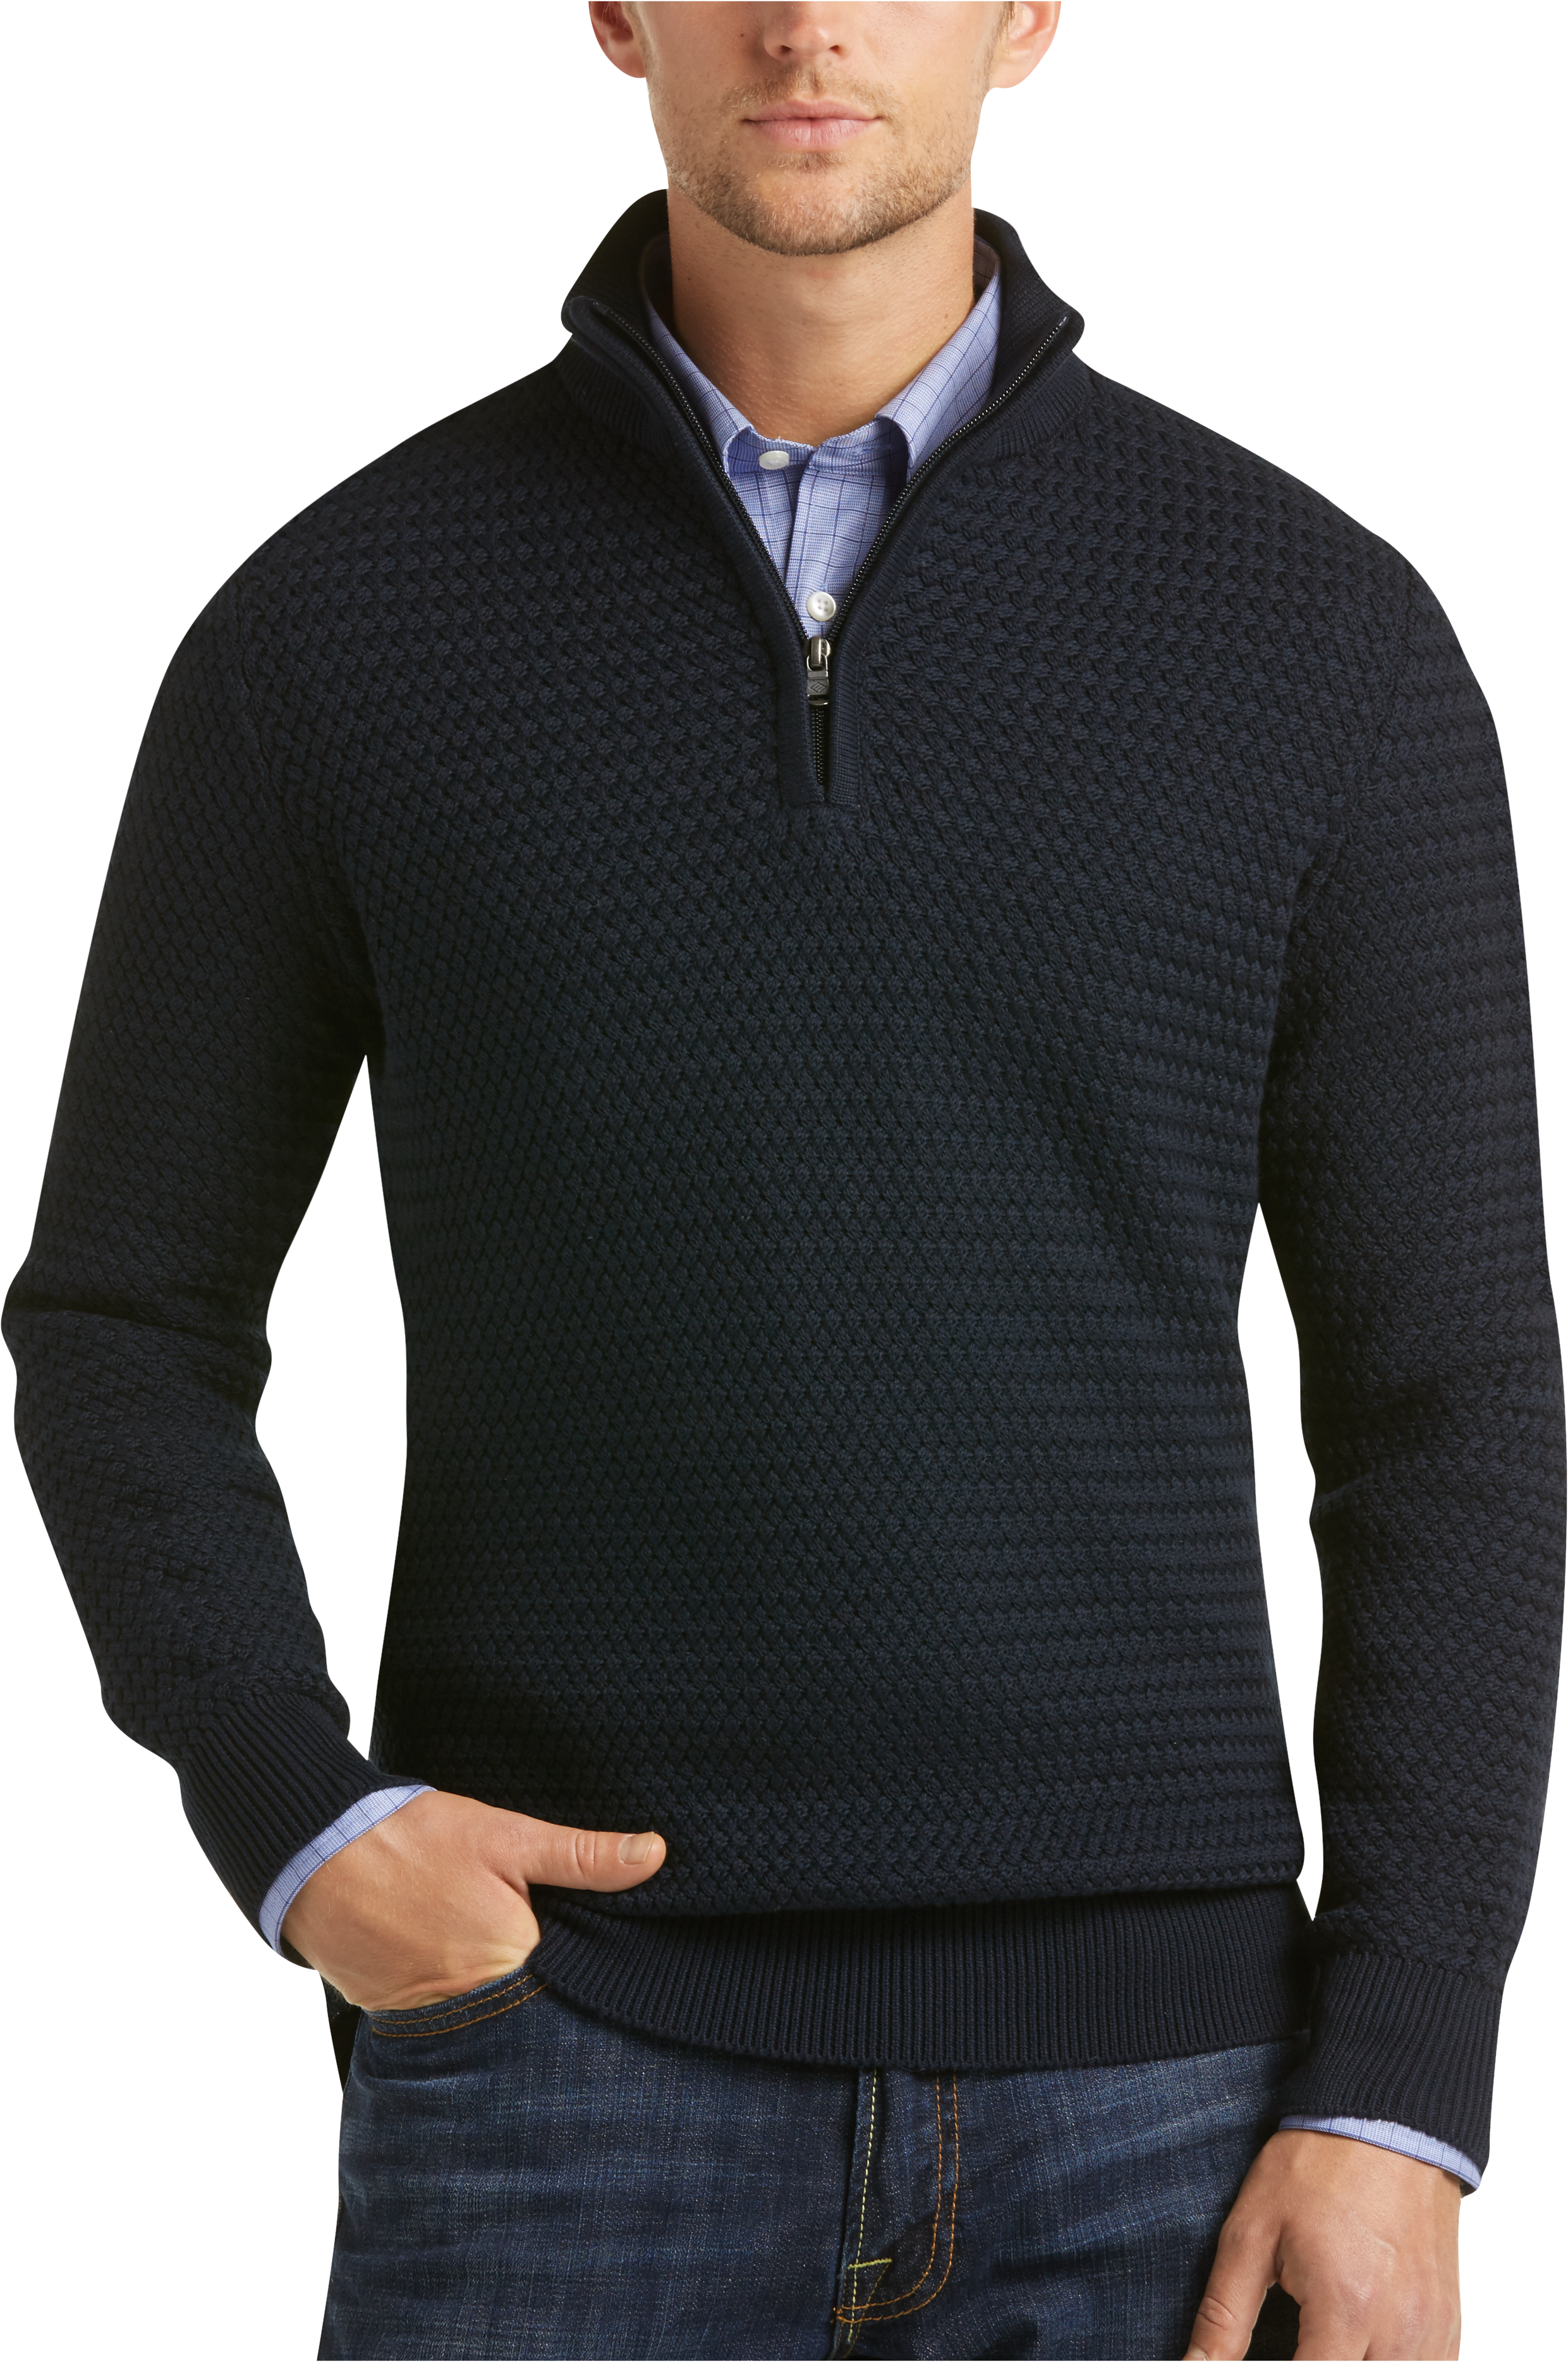 Joseph Abboud Navy Quarter-Zip Sweater - Men's Modern Fit | Men's Wearhouse